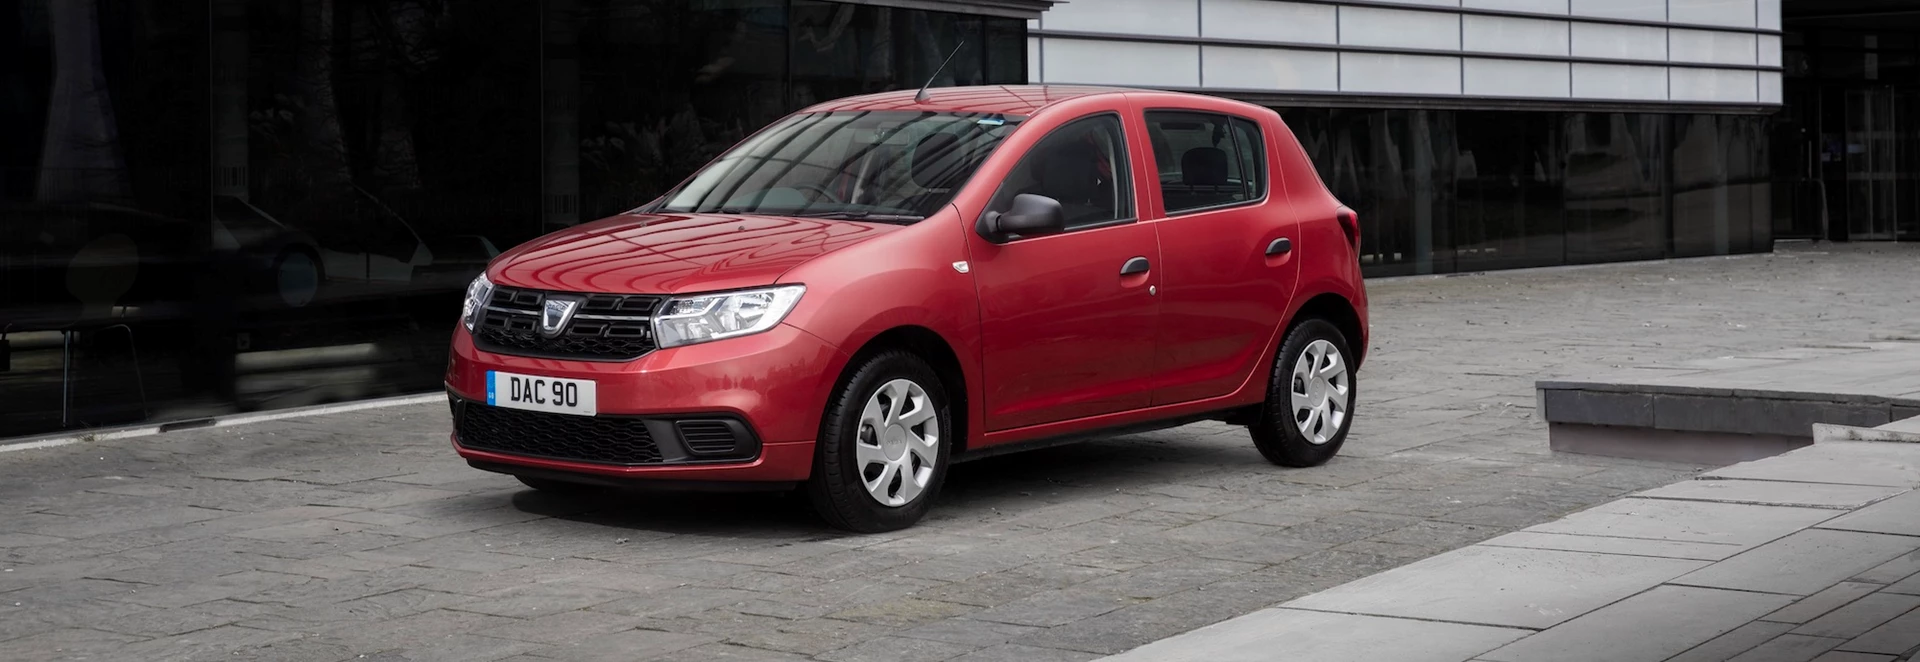 Dacia Sandero named best small hatchback in Honest John Satisfaction Index 